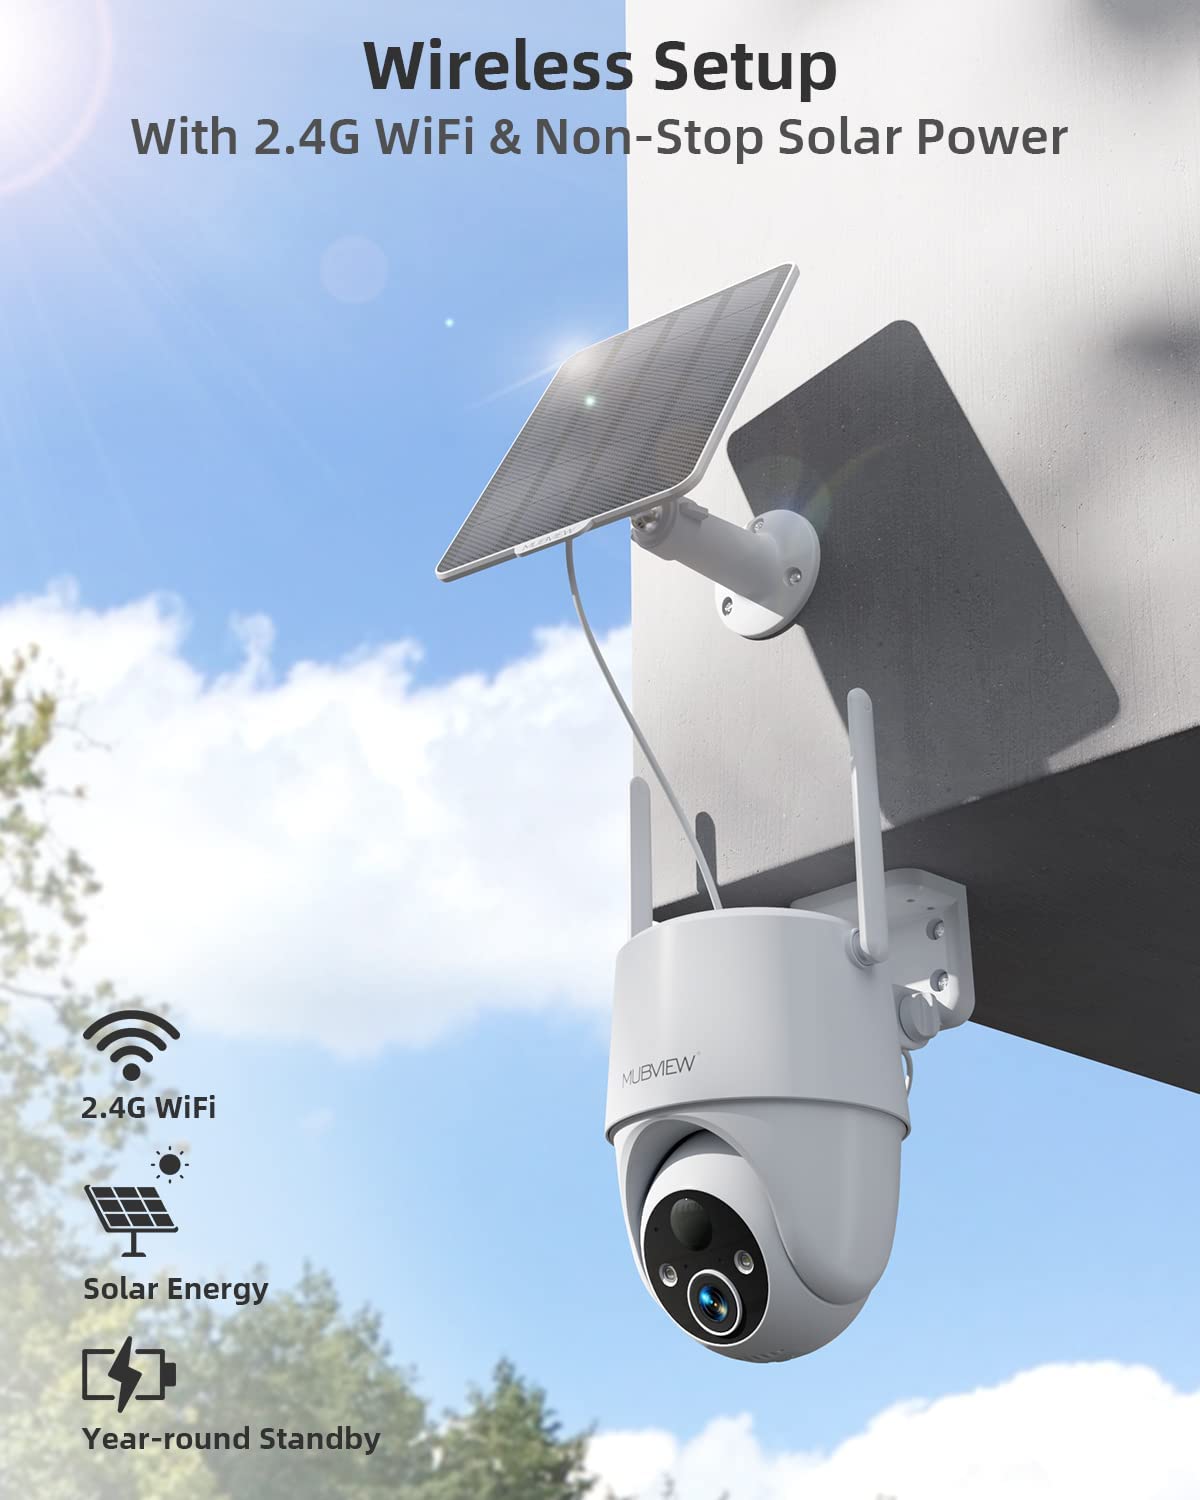 Caméra de surveillance intelligente 3MP HD, CAMÉRA IP WiFi sans